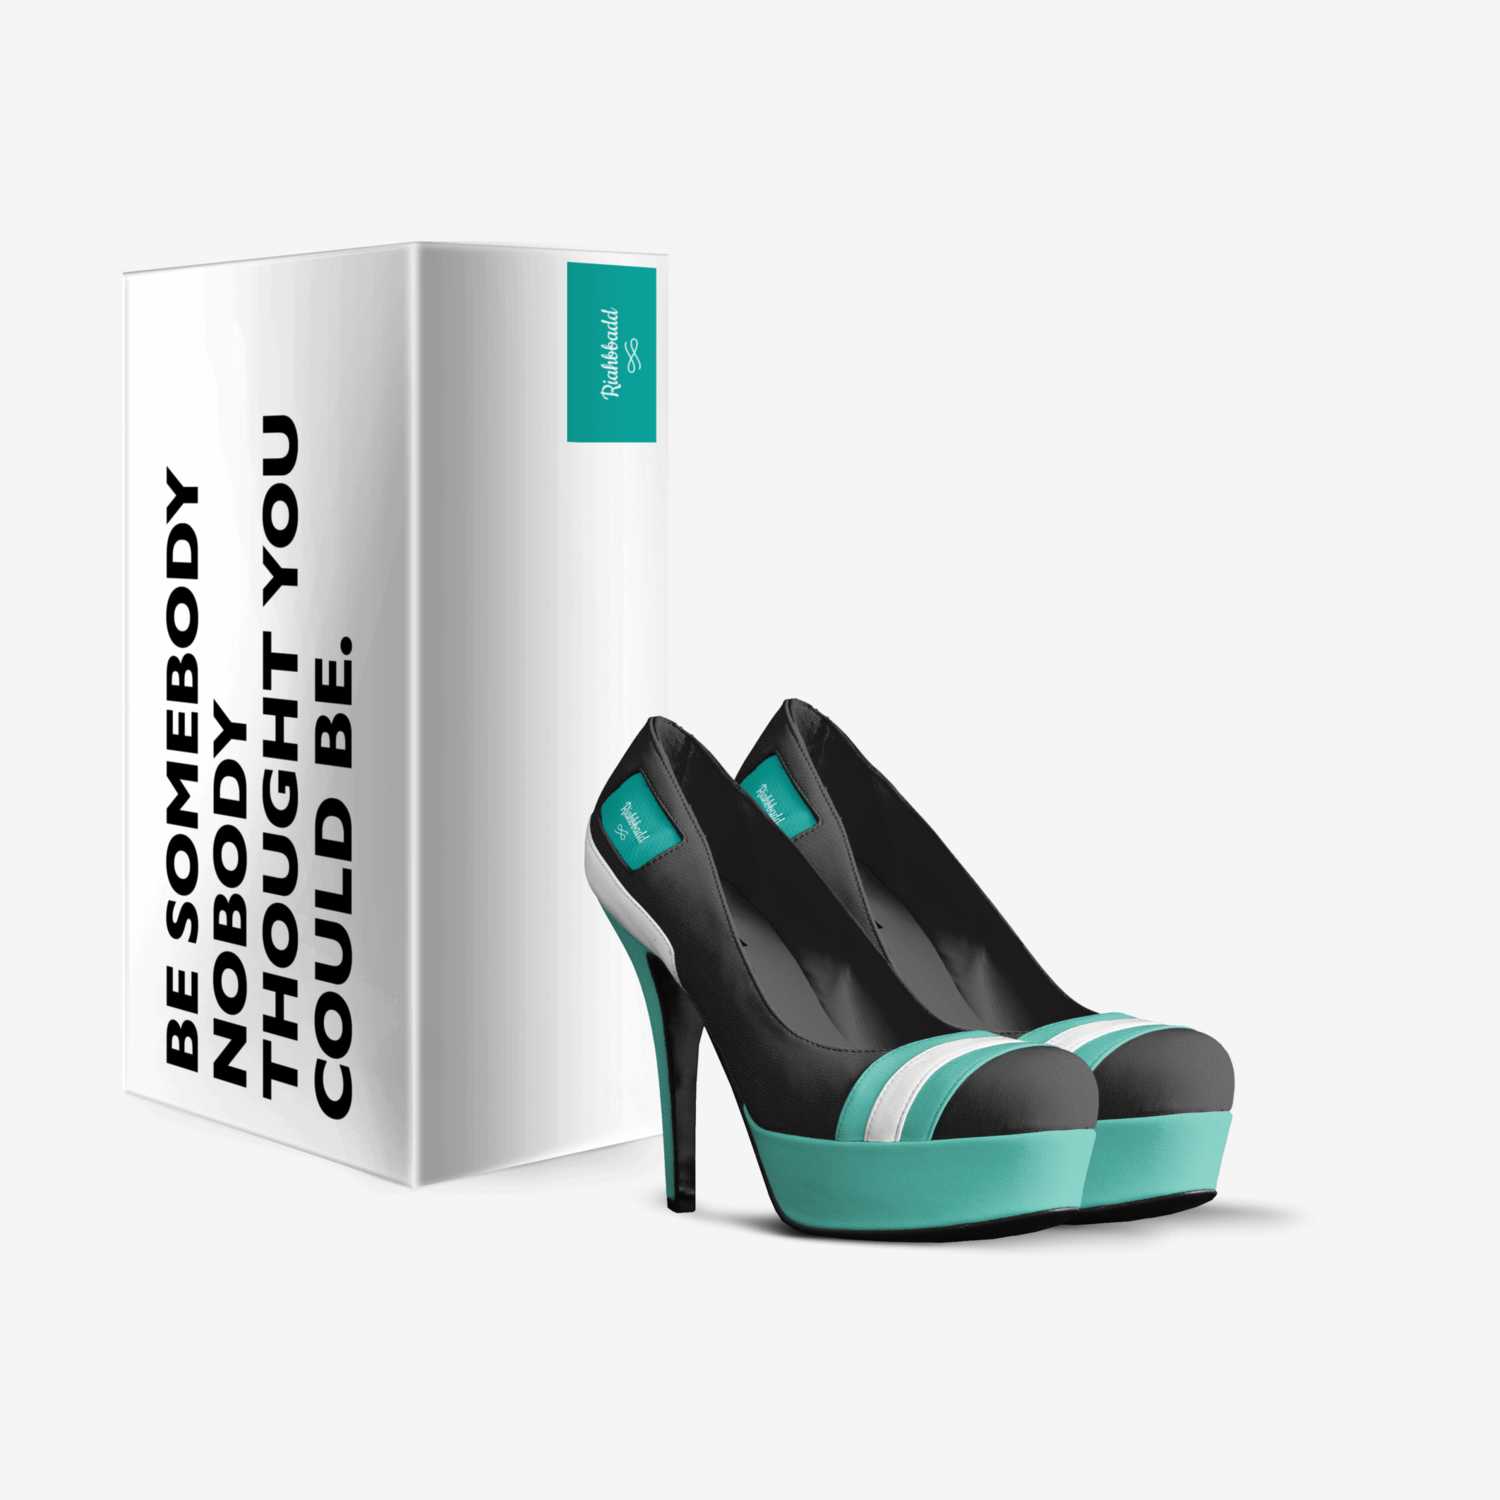 Riahbbadd custom made in Italy shoes by Mariah Wilson | Box view